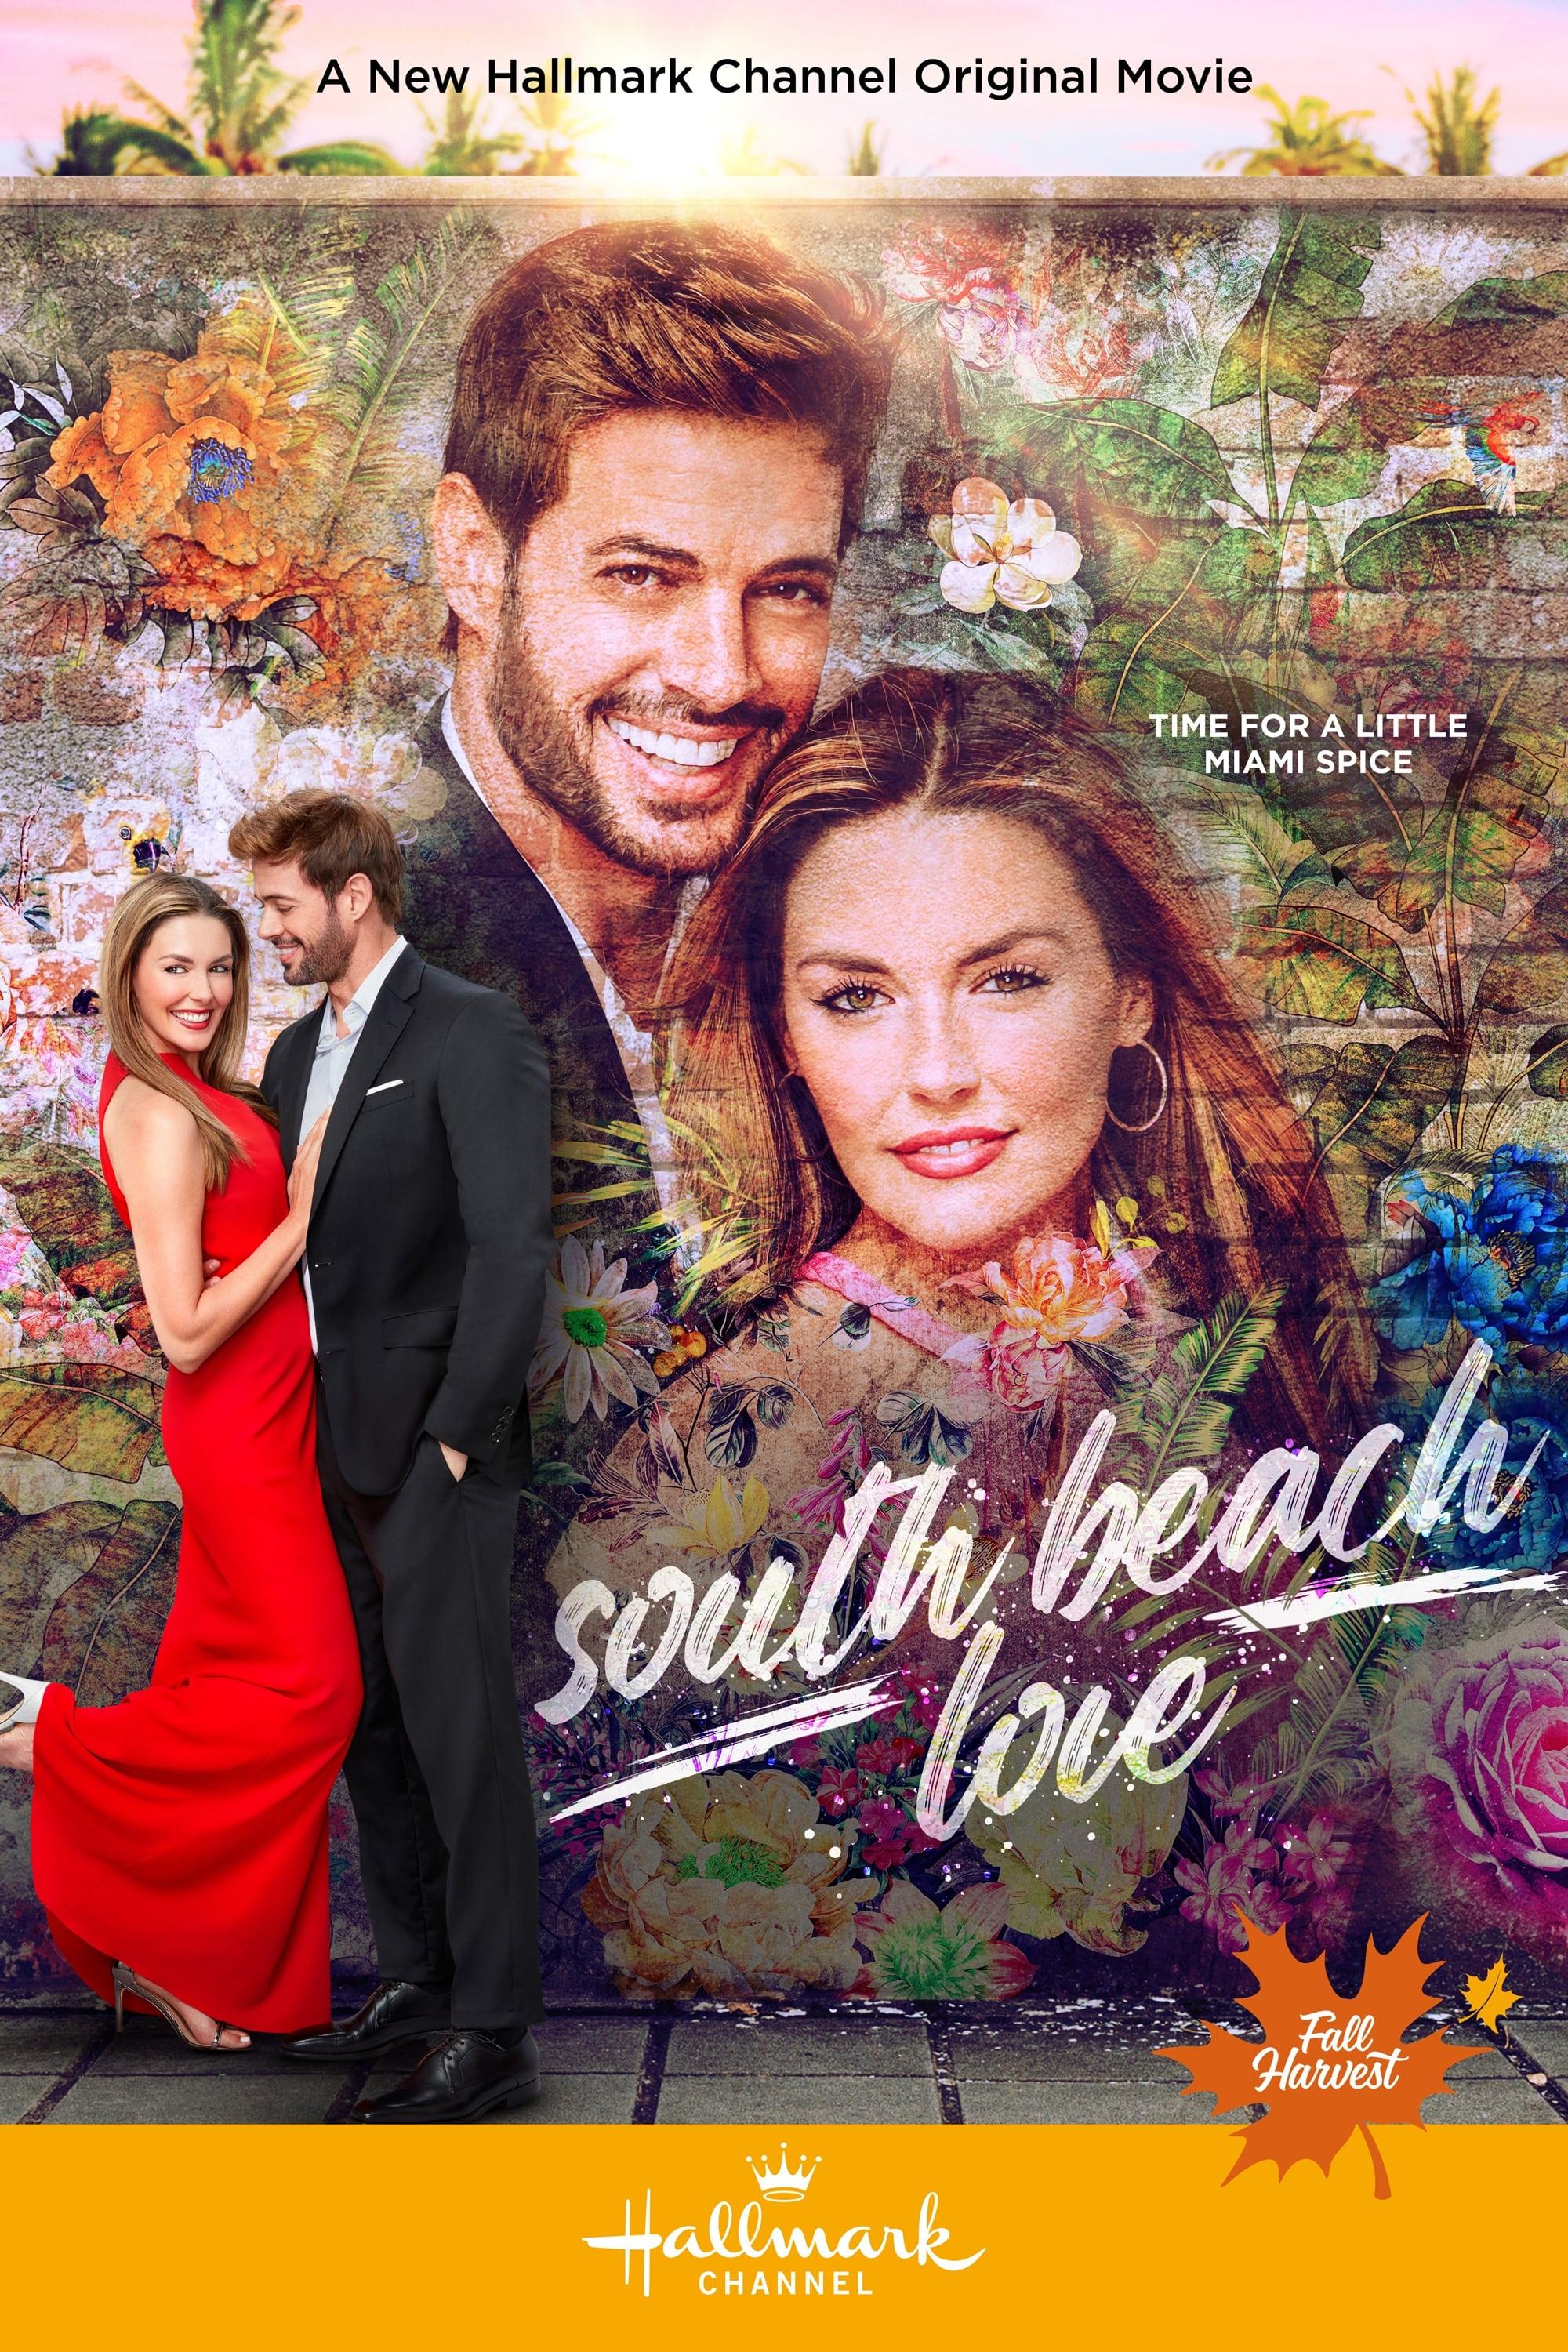 South Beach Love poster